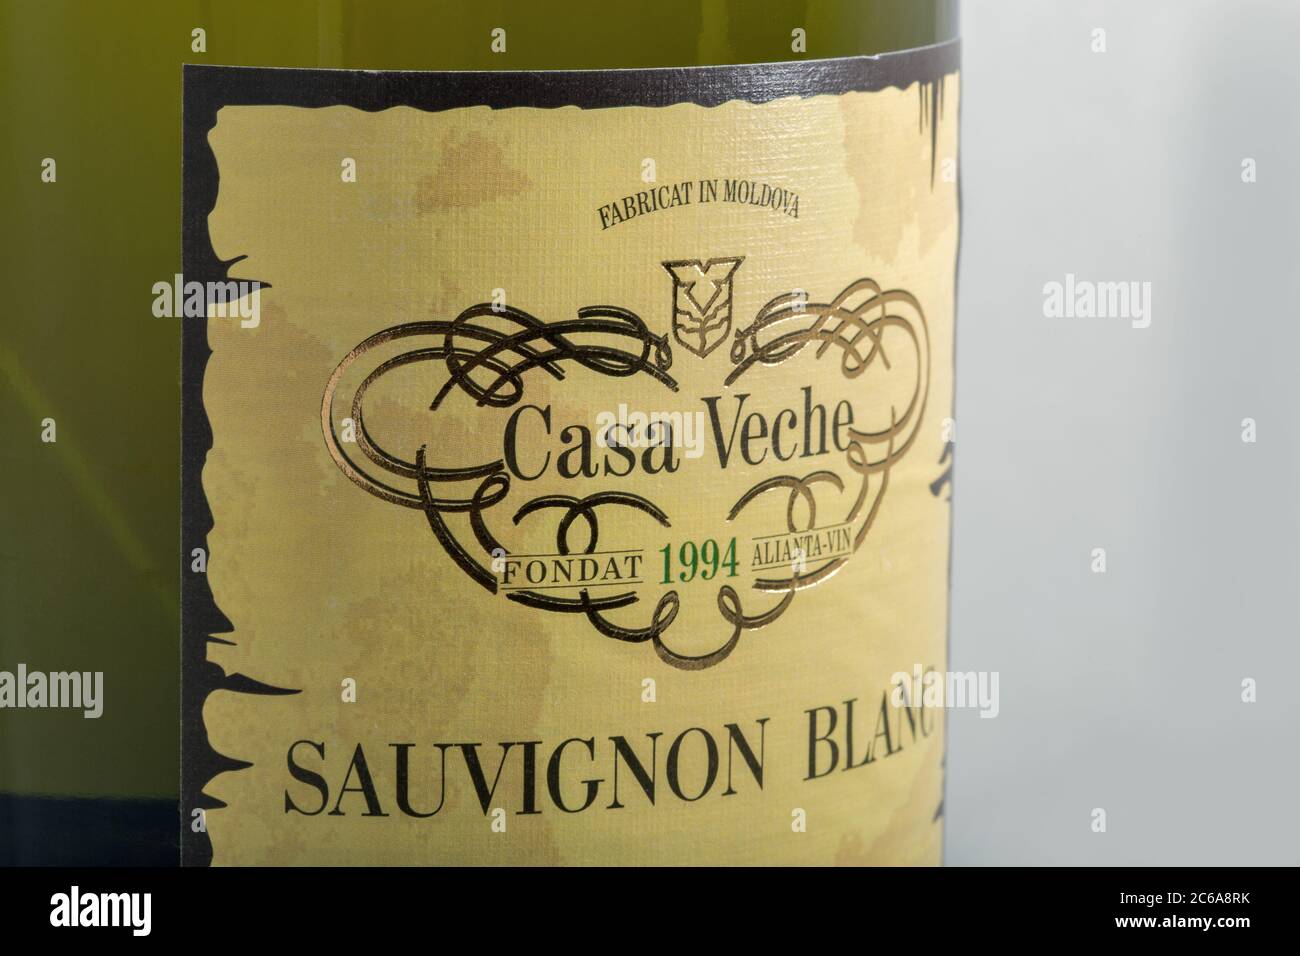 KYIV, UKRAINE - MAY 15, 2020: Cabernet Sauvignon Blanc wine bottle label from Casa Veche Moldavian winery closeup against white. Stock Photo